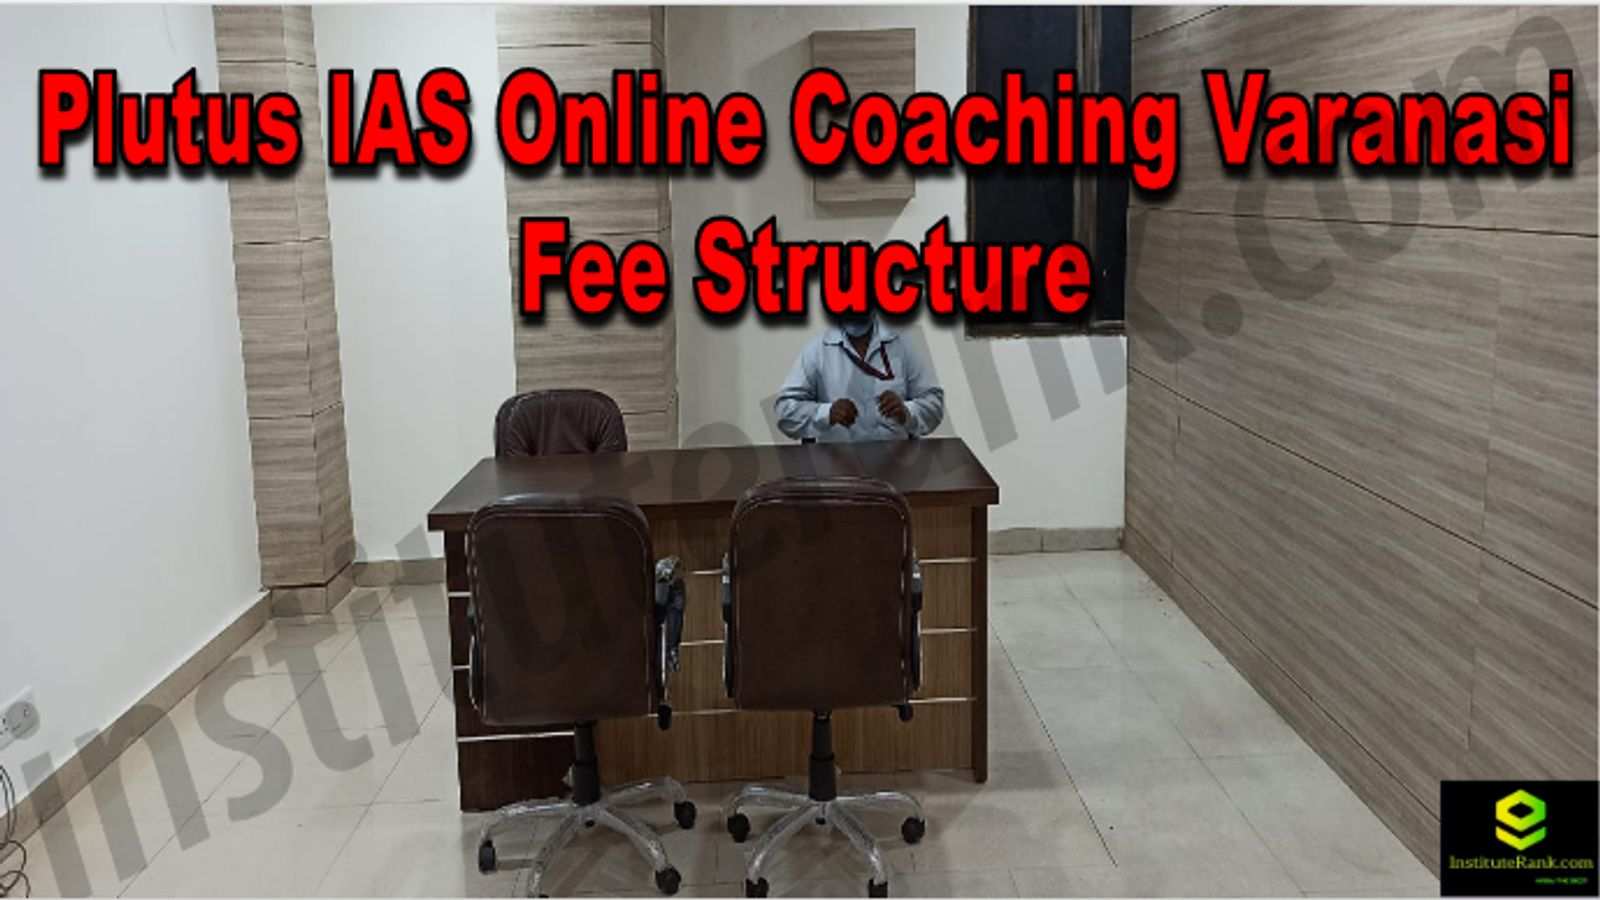 Plutus IAS Online Coaching Varanasi Reviews Fee Structure